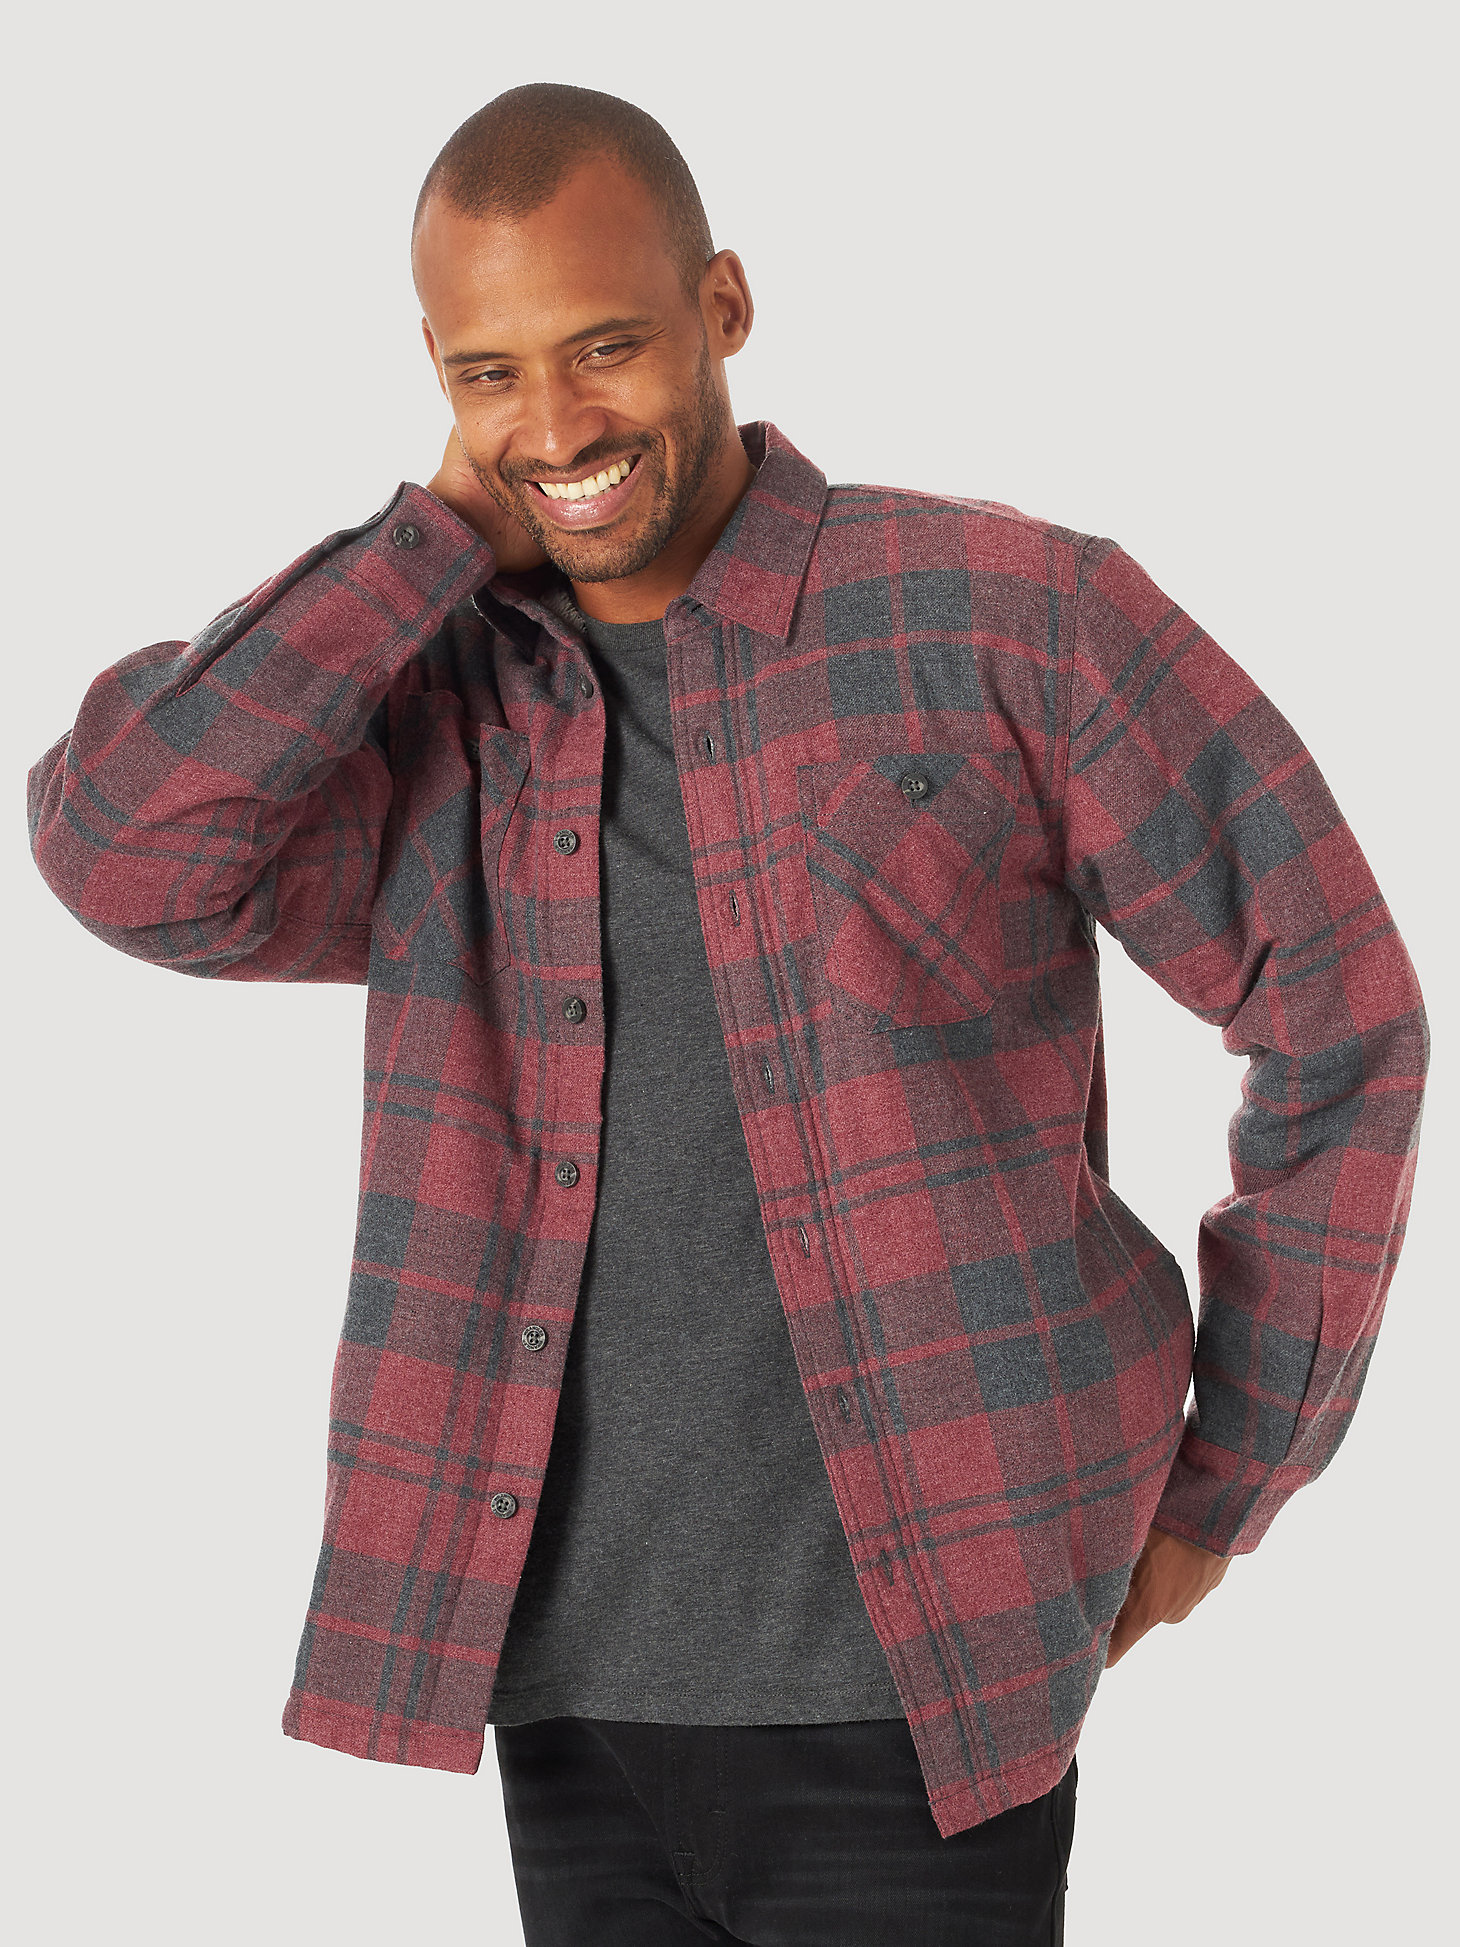 fireworks Blur chaos Men's Wrangler® Authentics Sherpa Lined Flannel Shirt